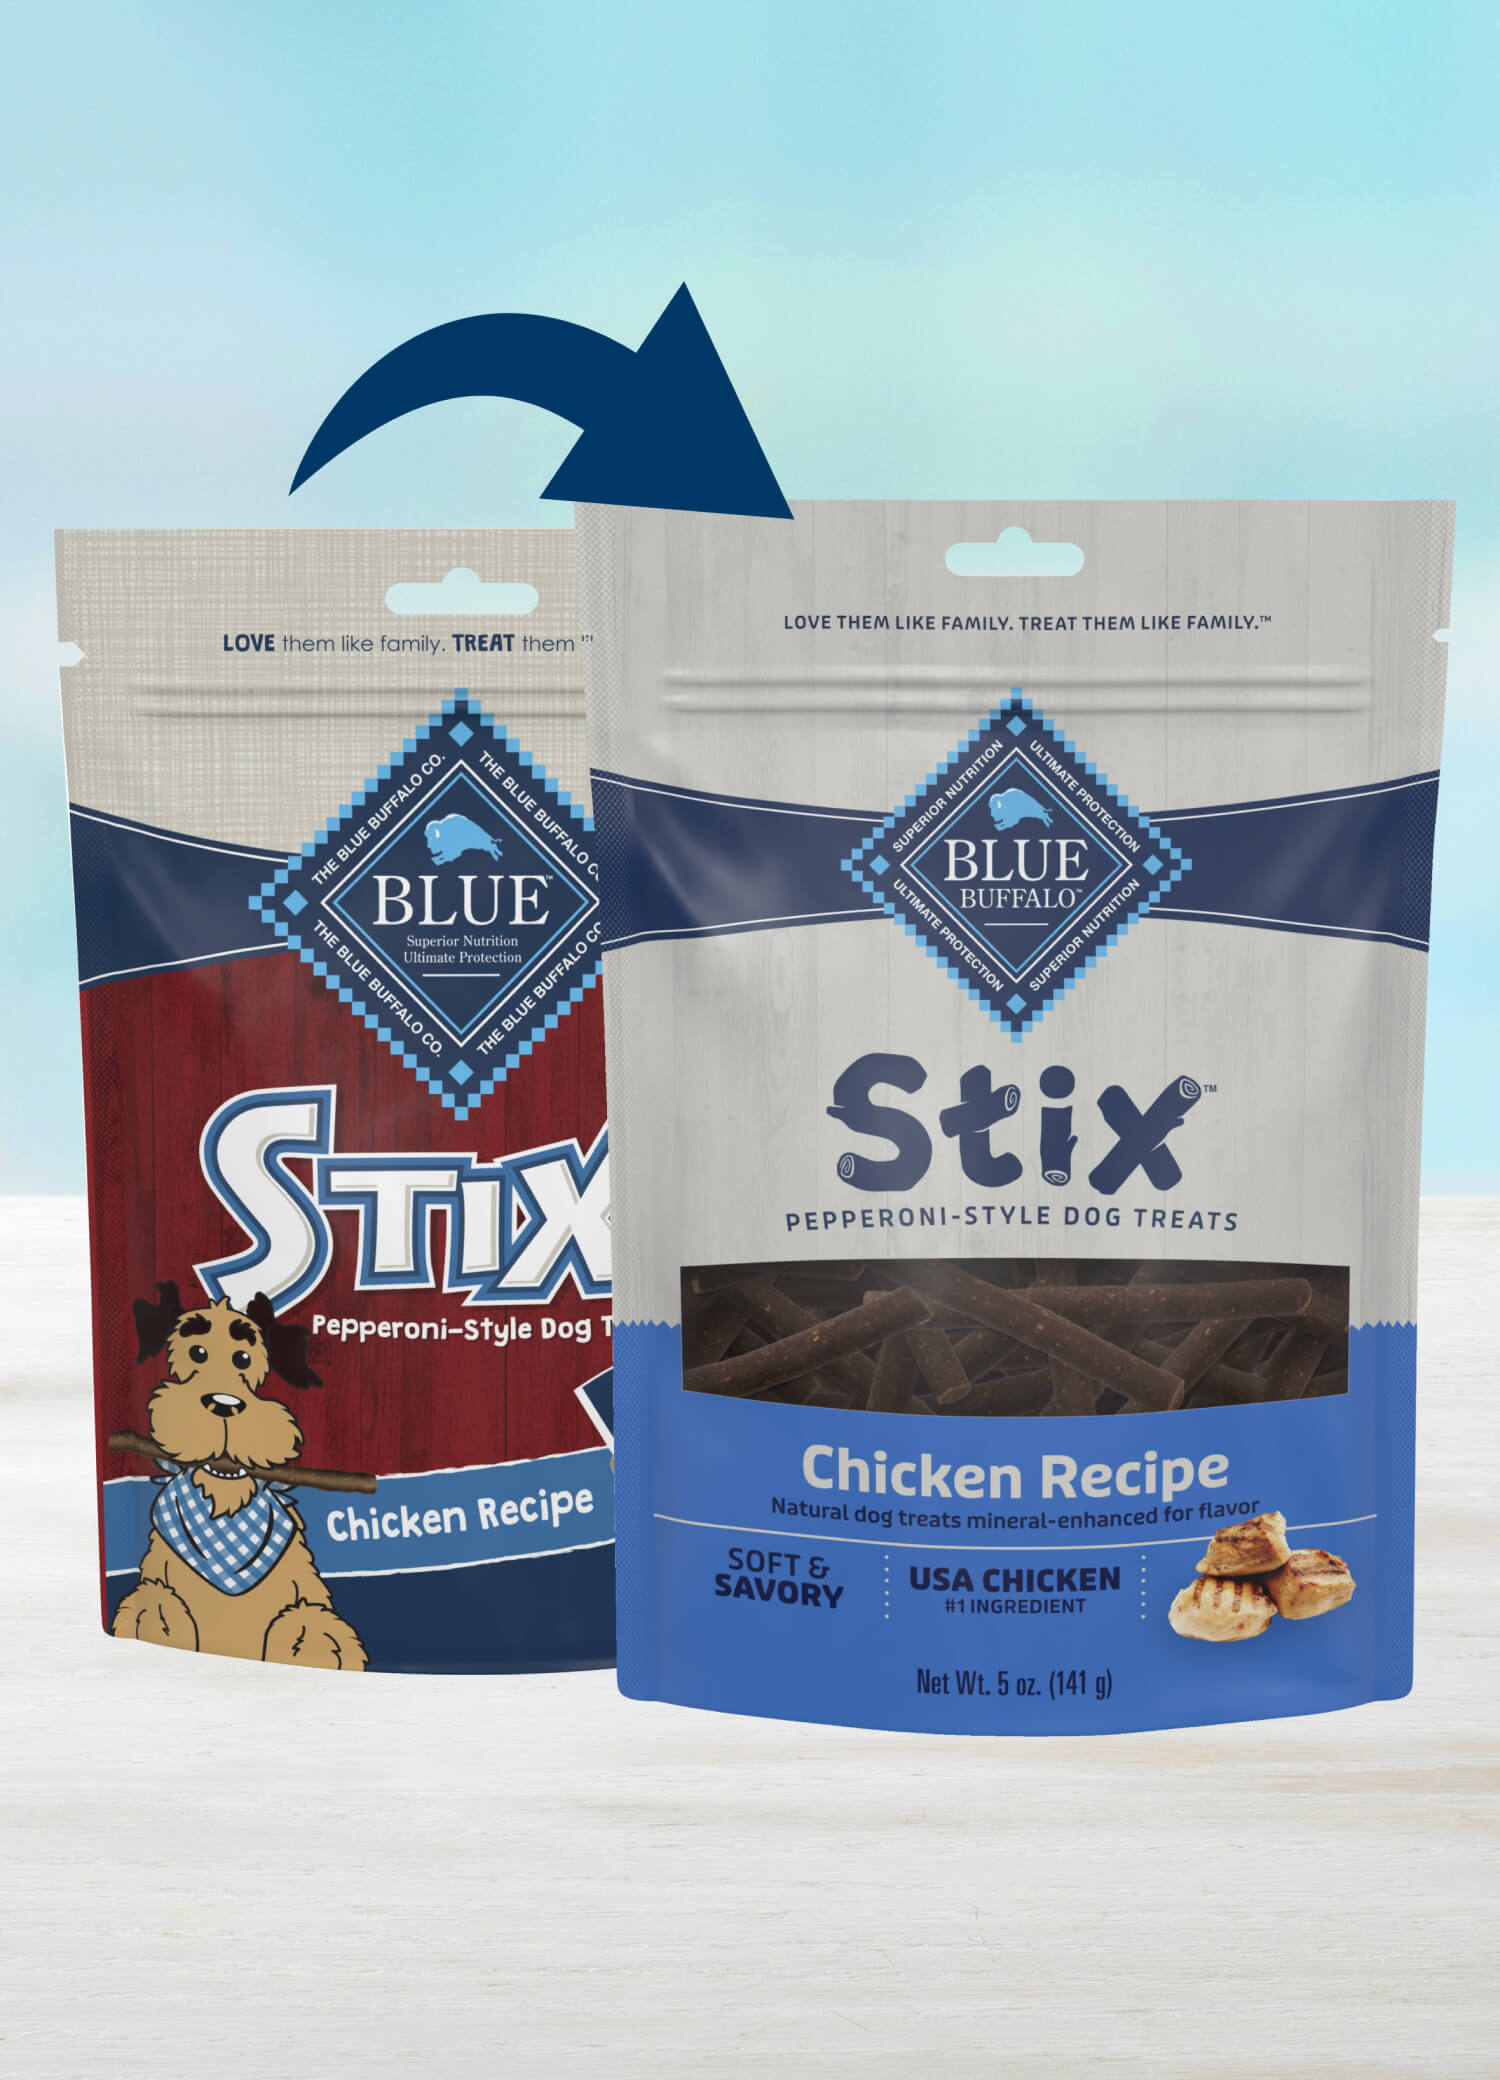 A bag of BLUE Stix Pepperoni-Style Dog Treats Chicken Recipe dog food